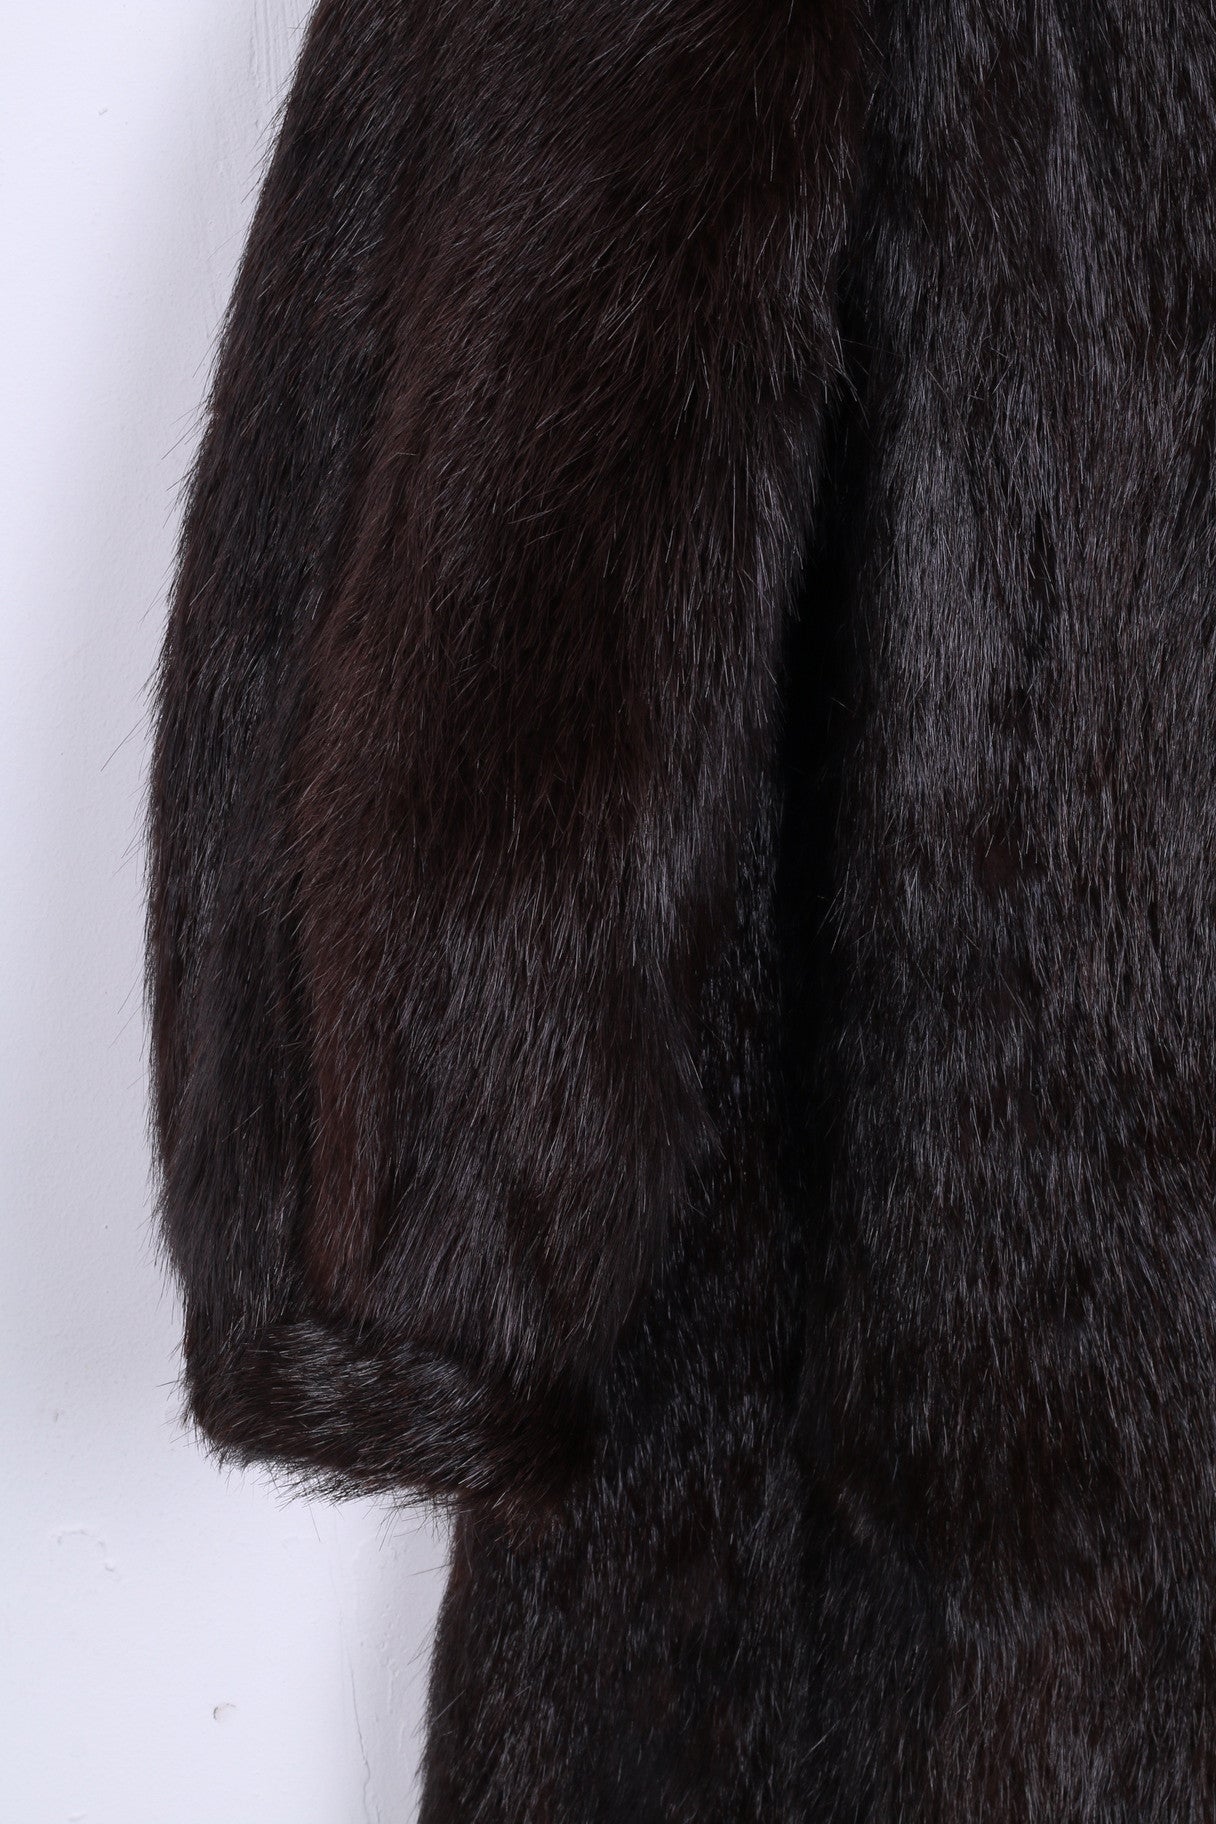 Womens XL Coat Authentic Fur Dark Brown Boho Vintage